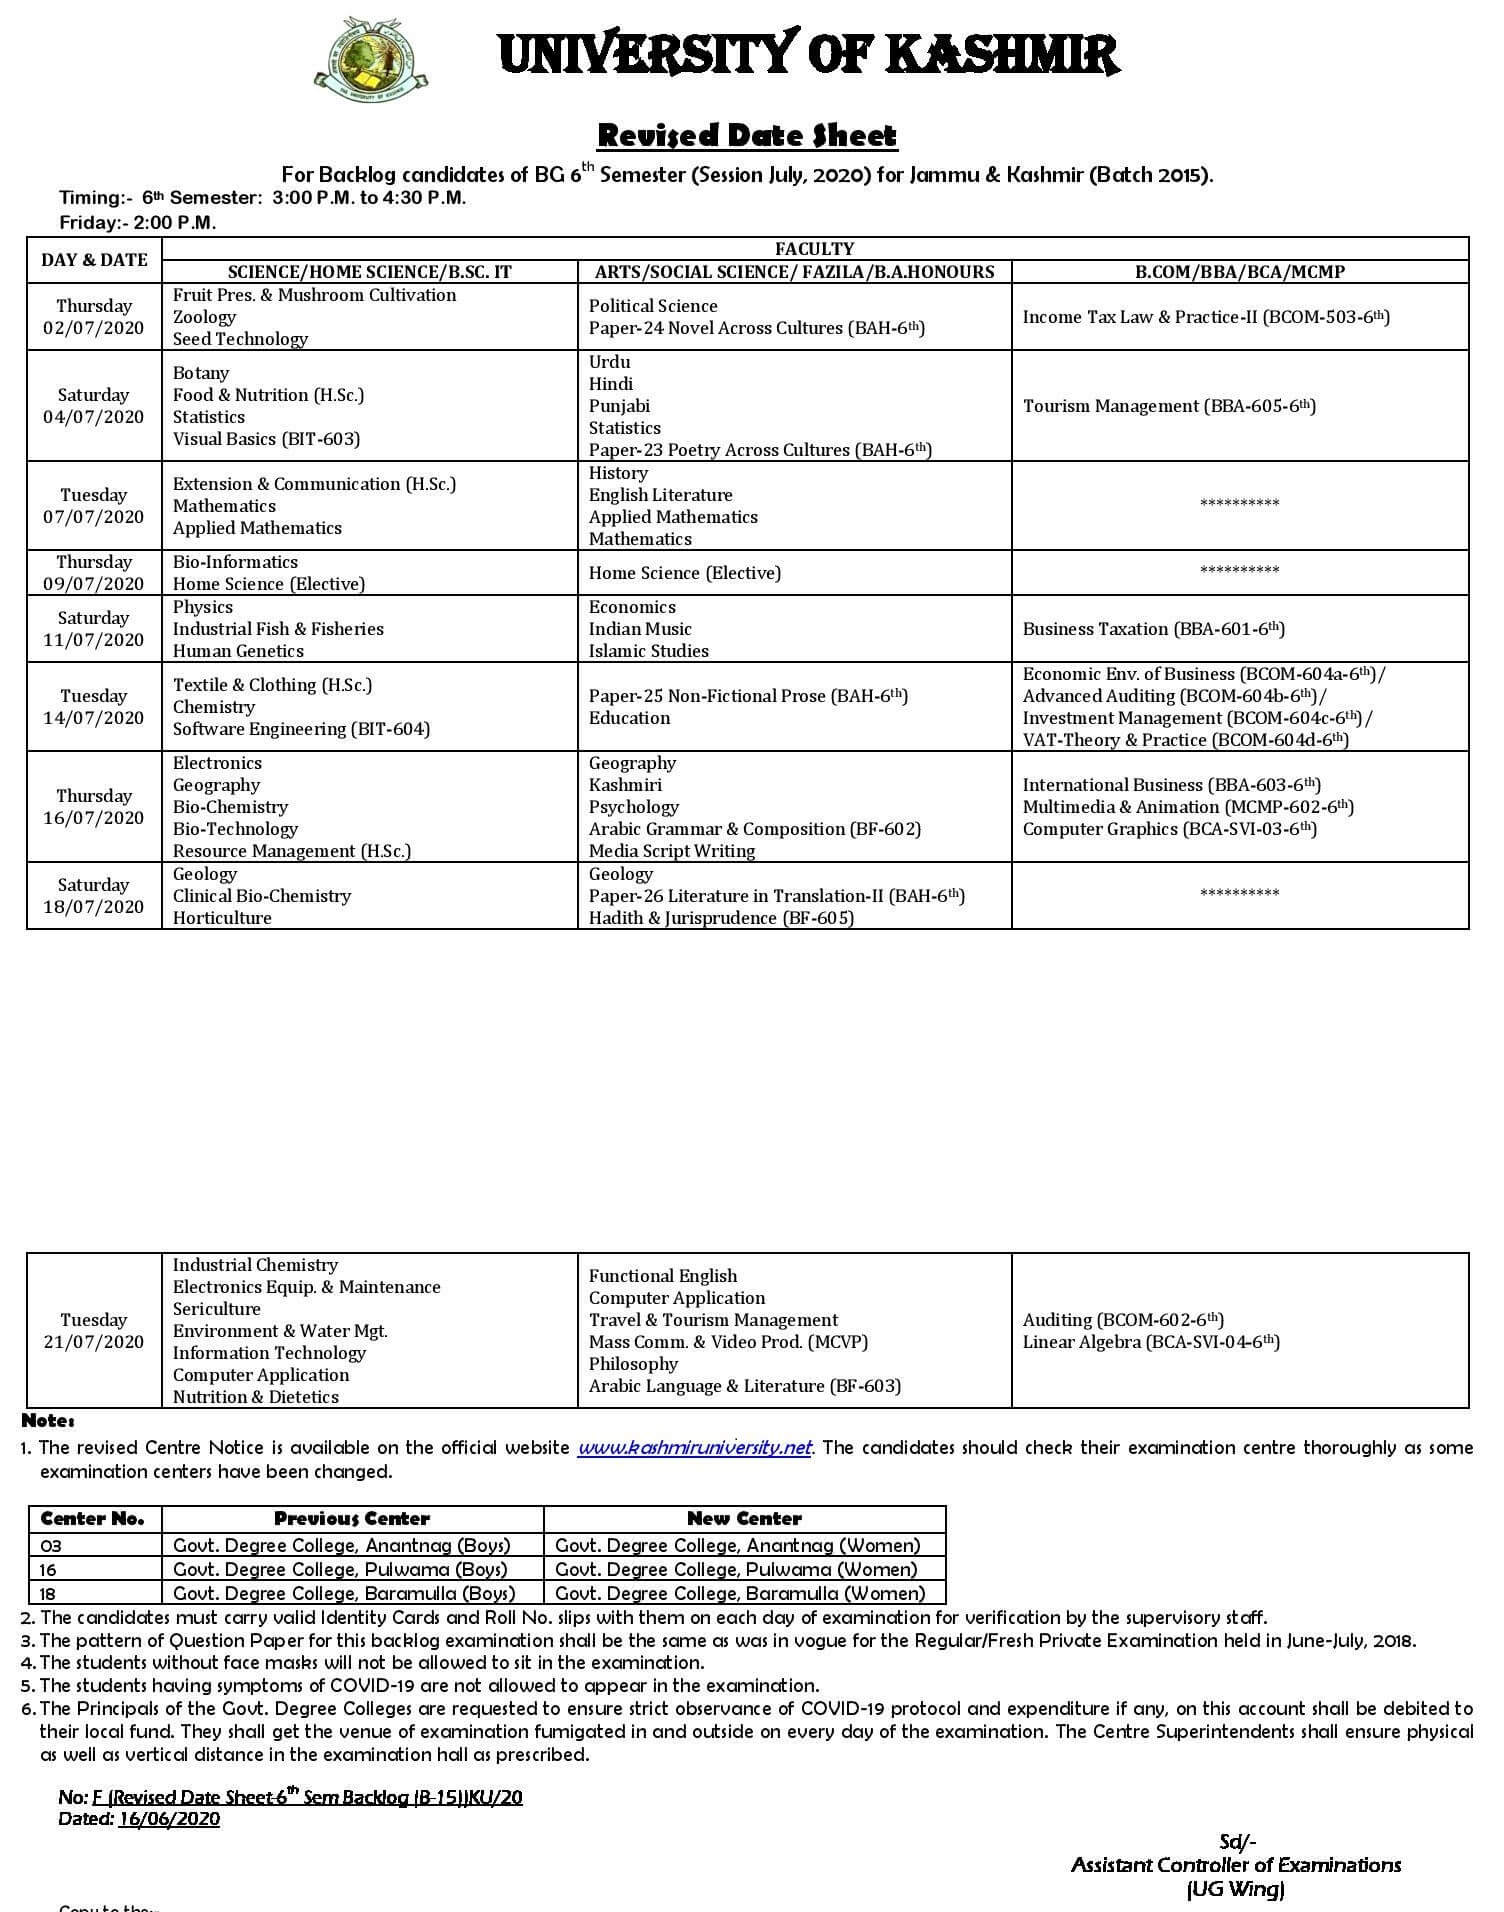 KU Revised Date Sheet for BG 6th Semester (Backlog; Batch 2015)